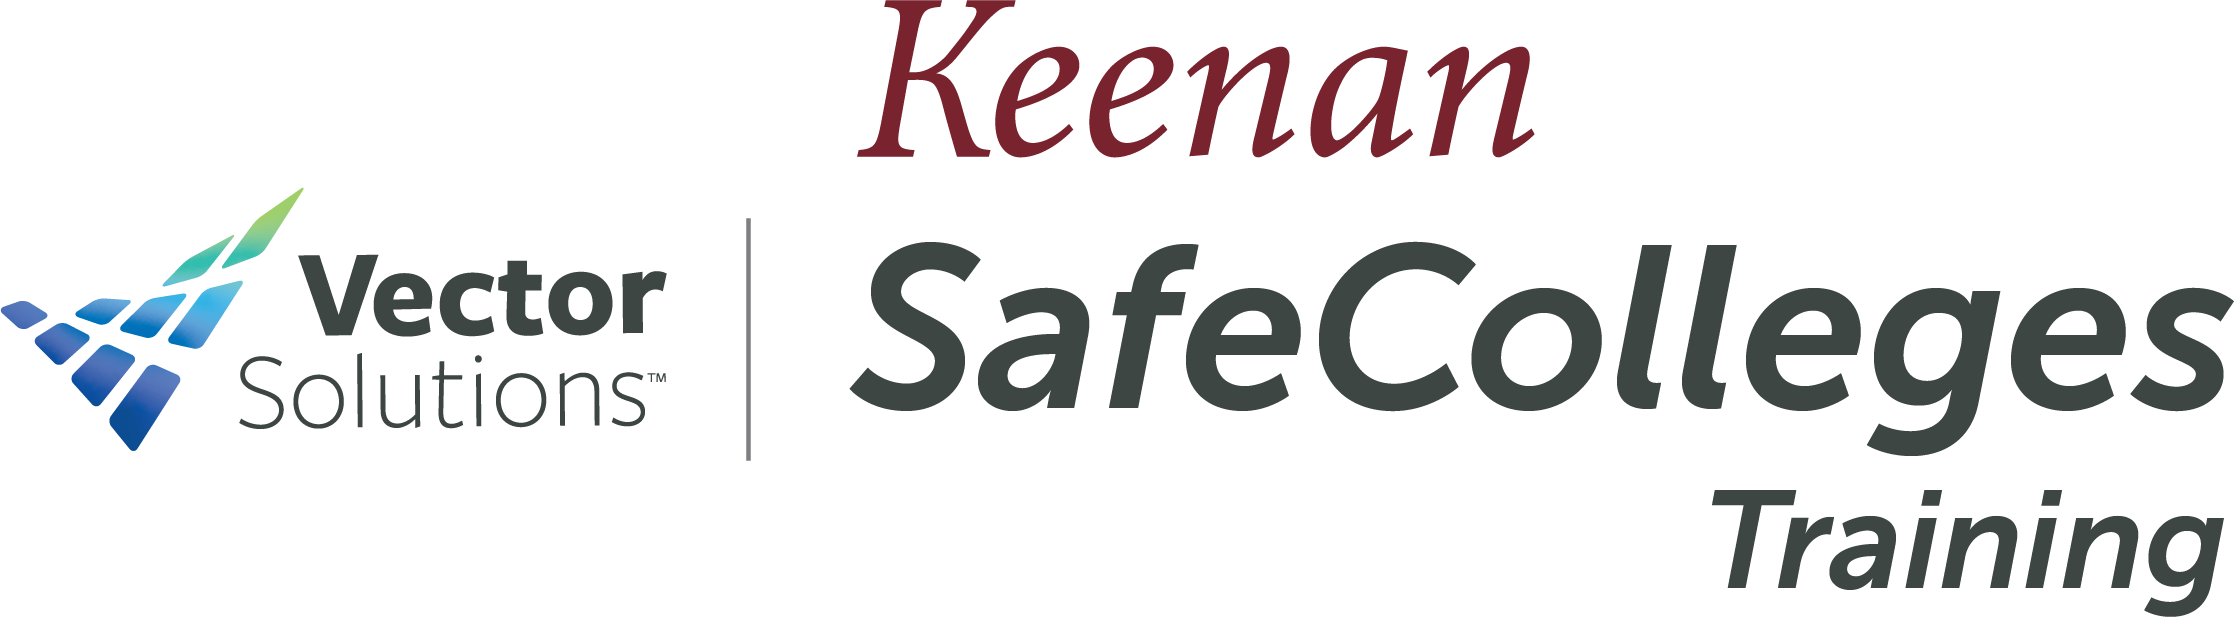 Keenan SafeColleges Training